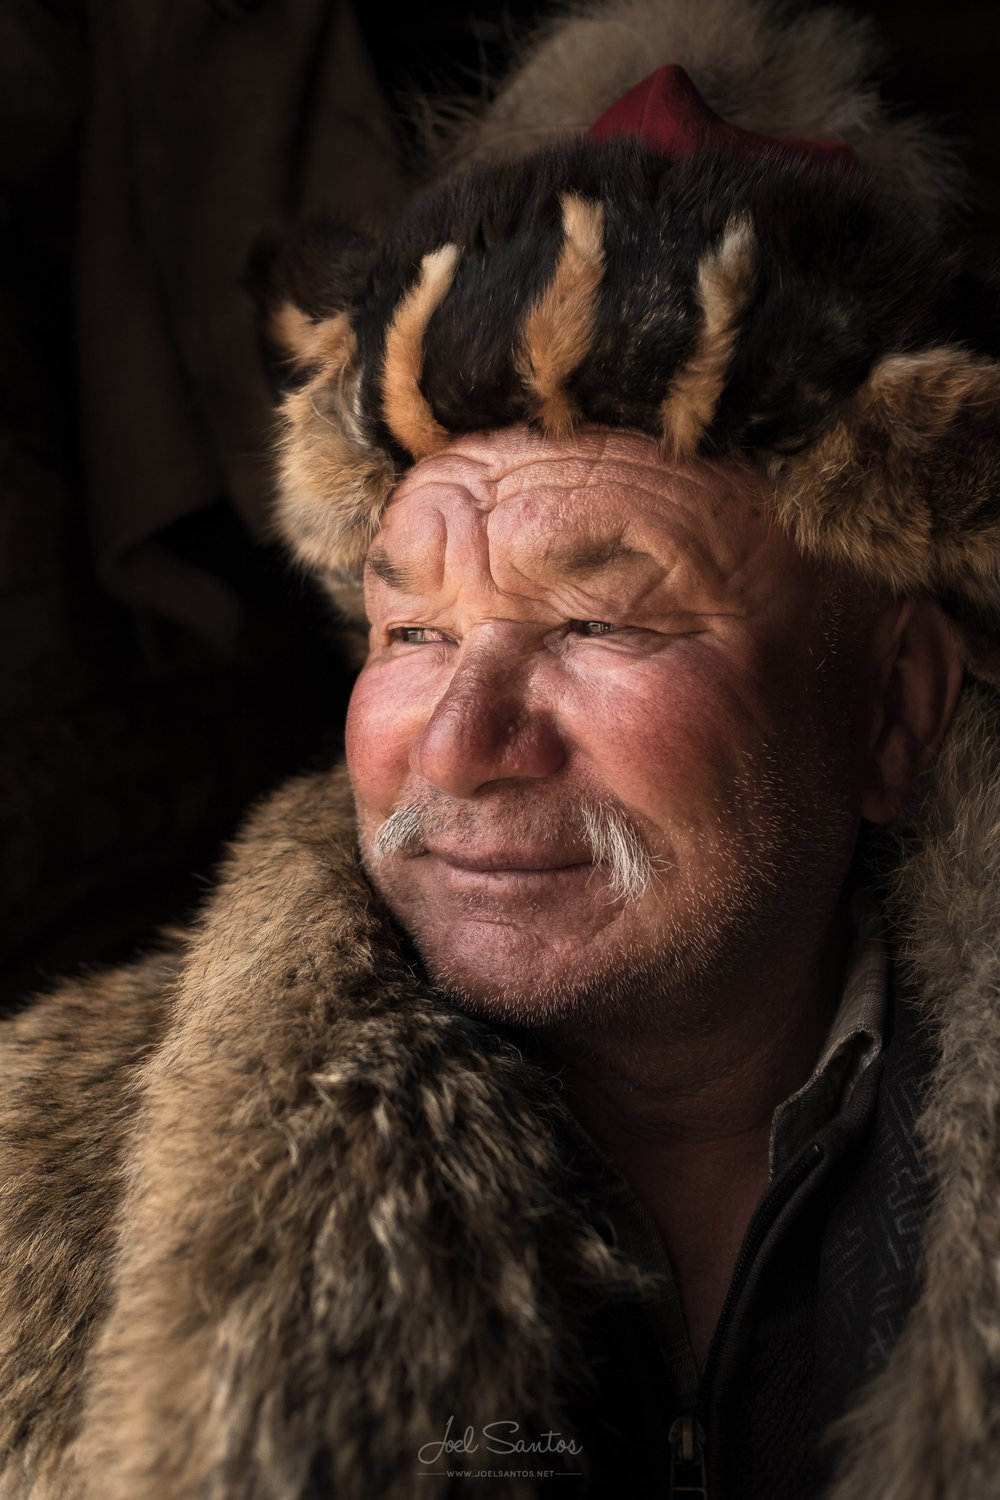 Shokhan's father, former Eagle Hunter, Altai, Western Mongolia